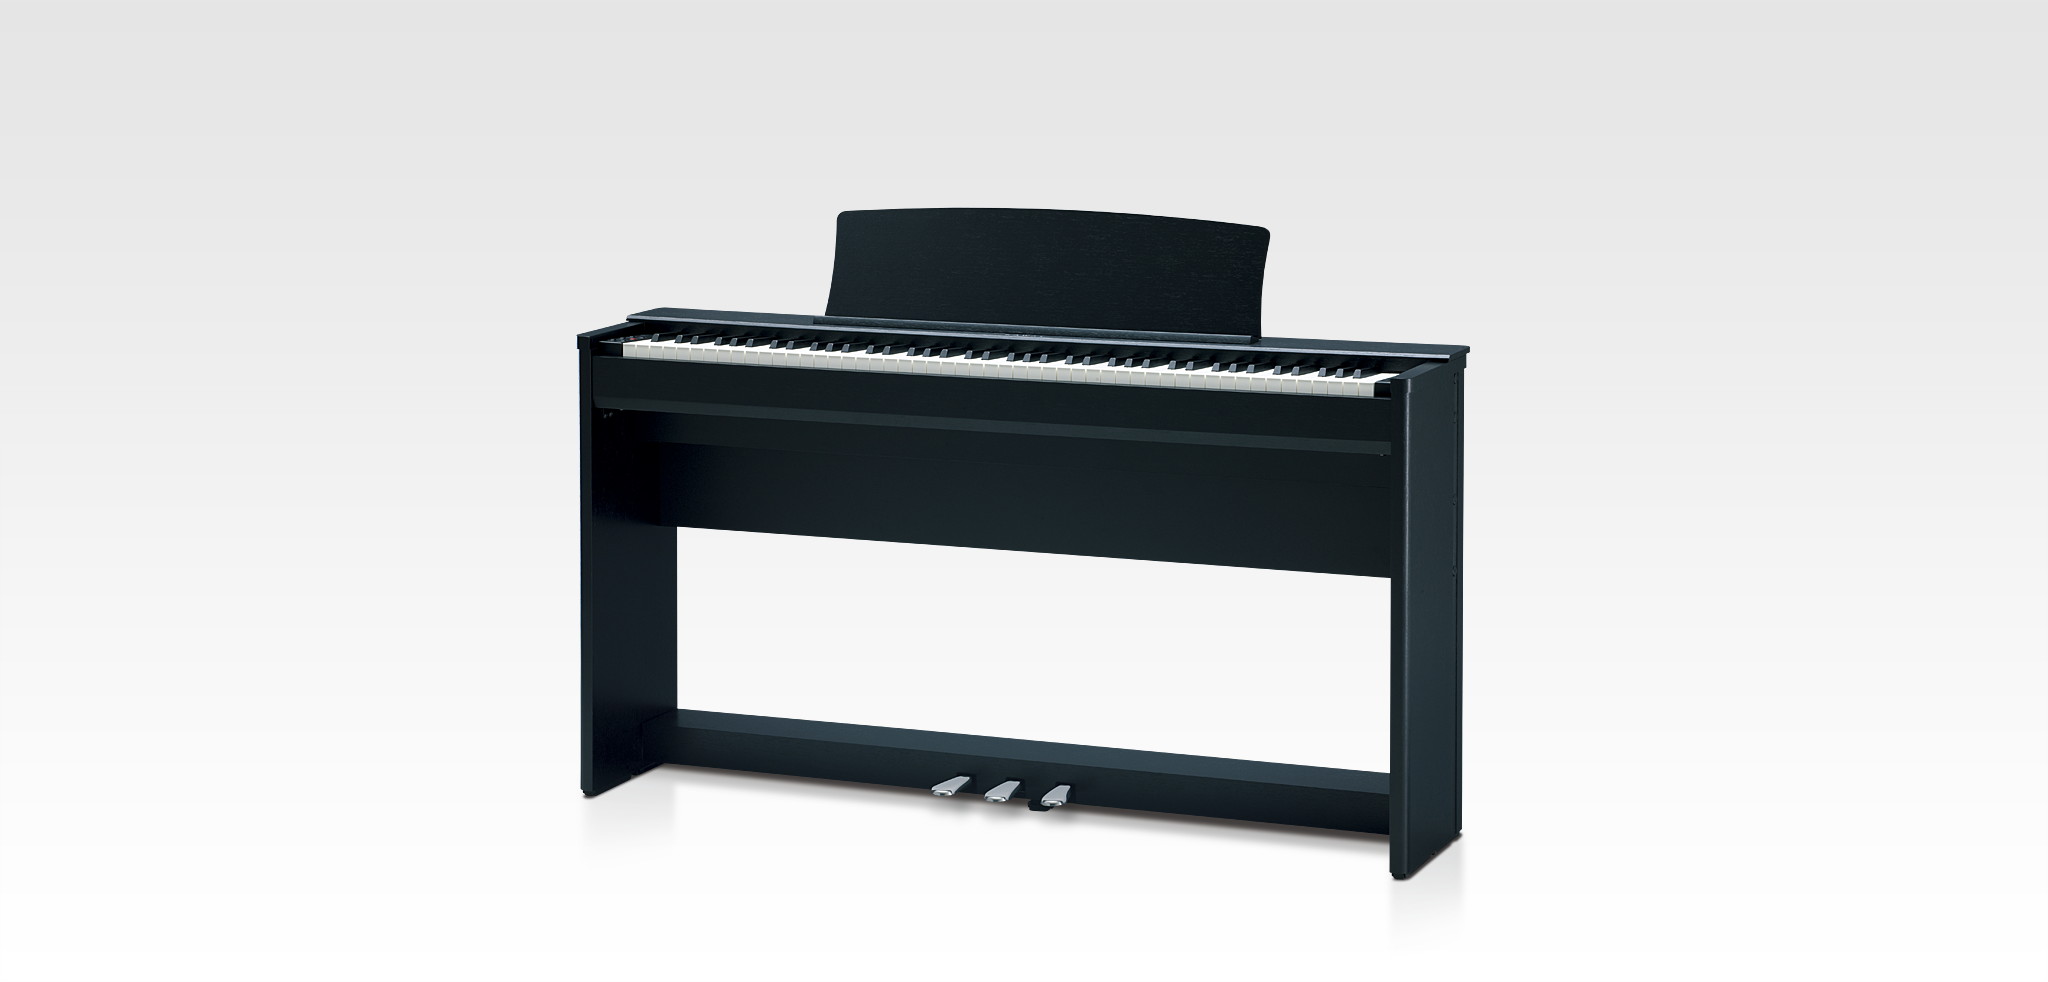 twelve Lengthen barbecue Kawai CL36｜Digital Pianos｜Products｜Kawai Musical Instruments Manufacturing  Co., Ltd.